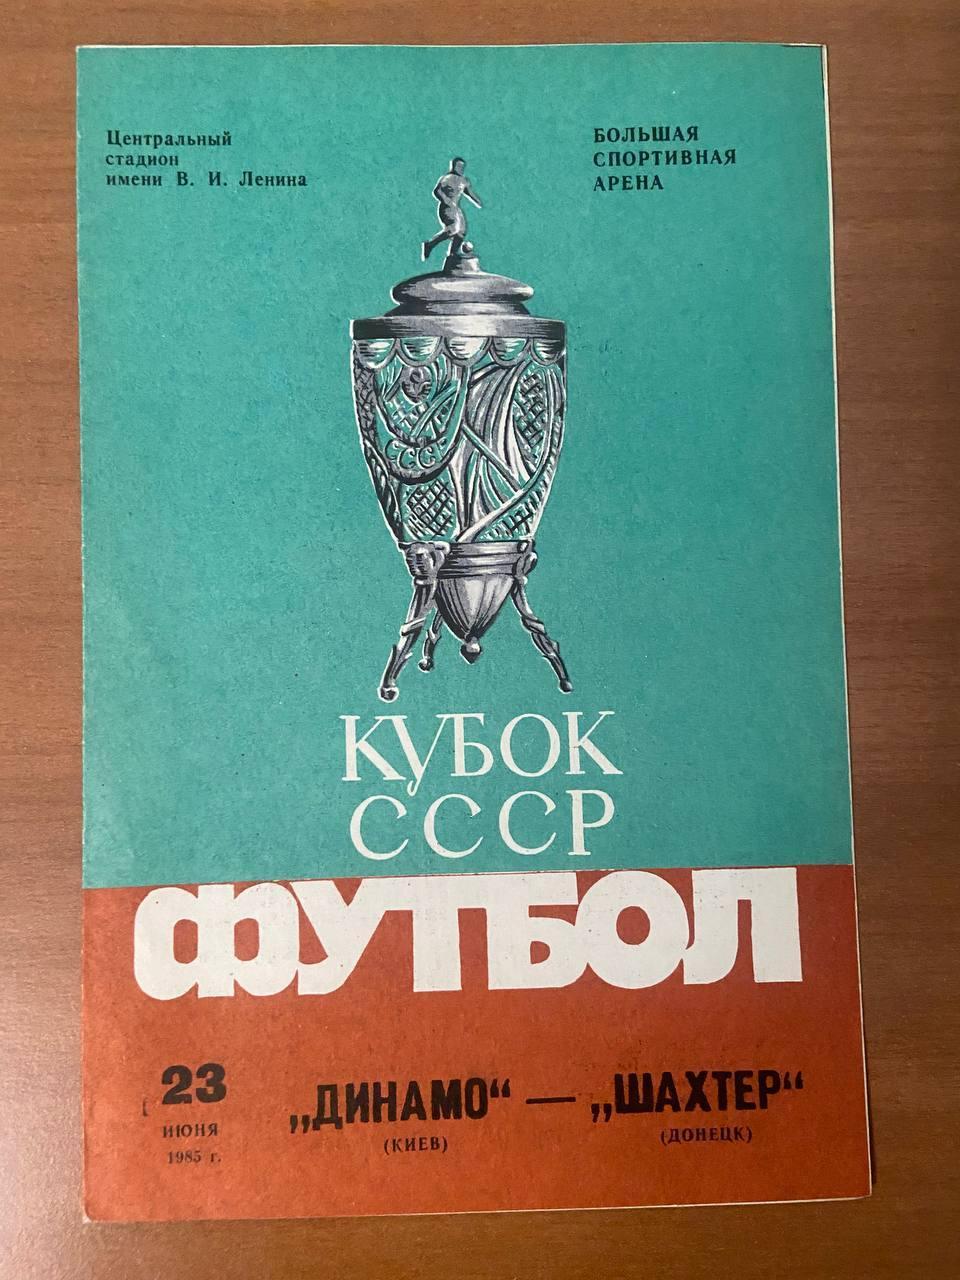 Динамо (Киев) - Шахтёр (Донецк), 23 июня 1985 г. Кубок СССР.